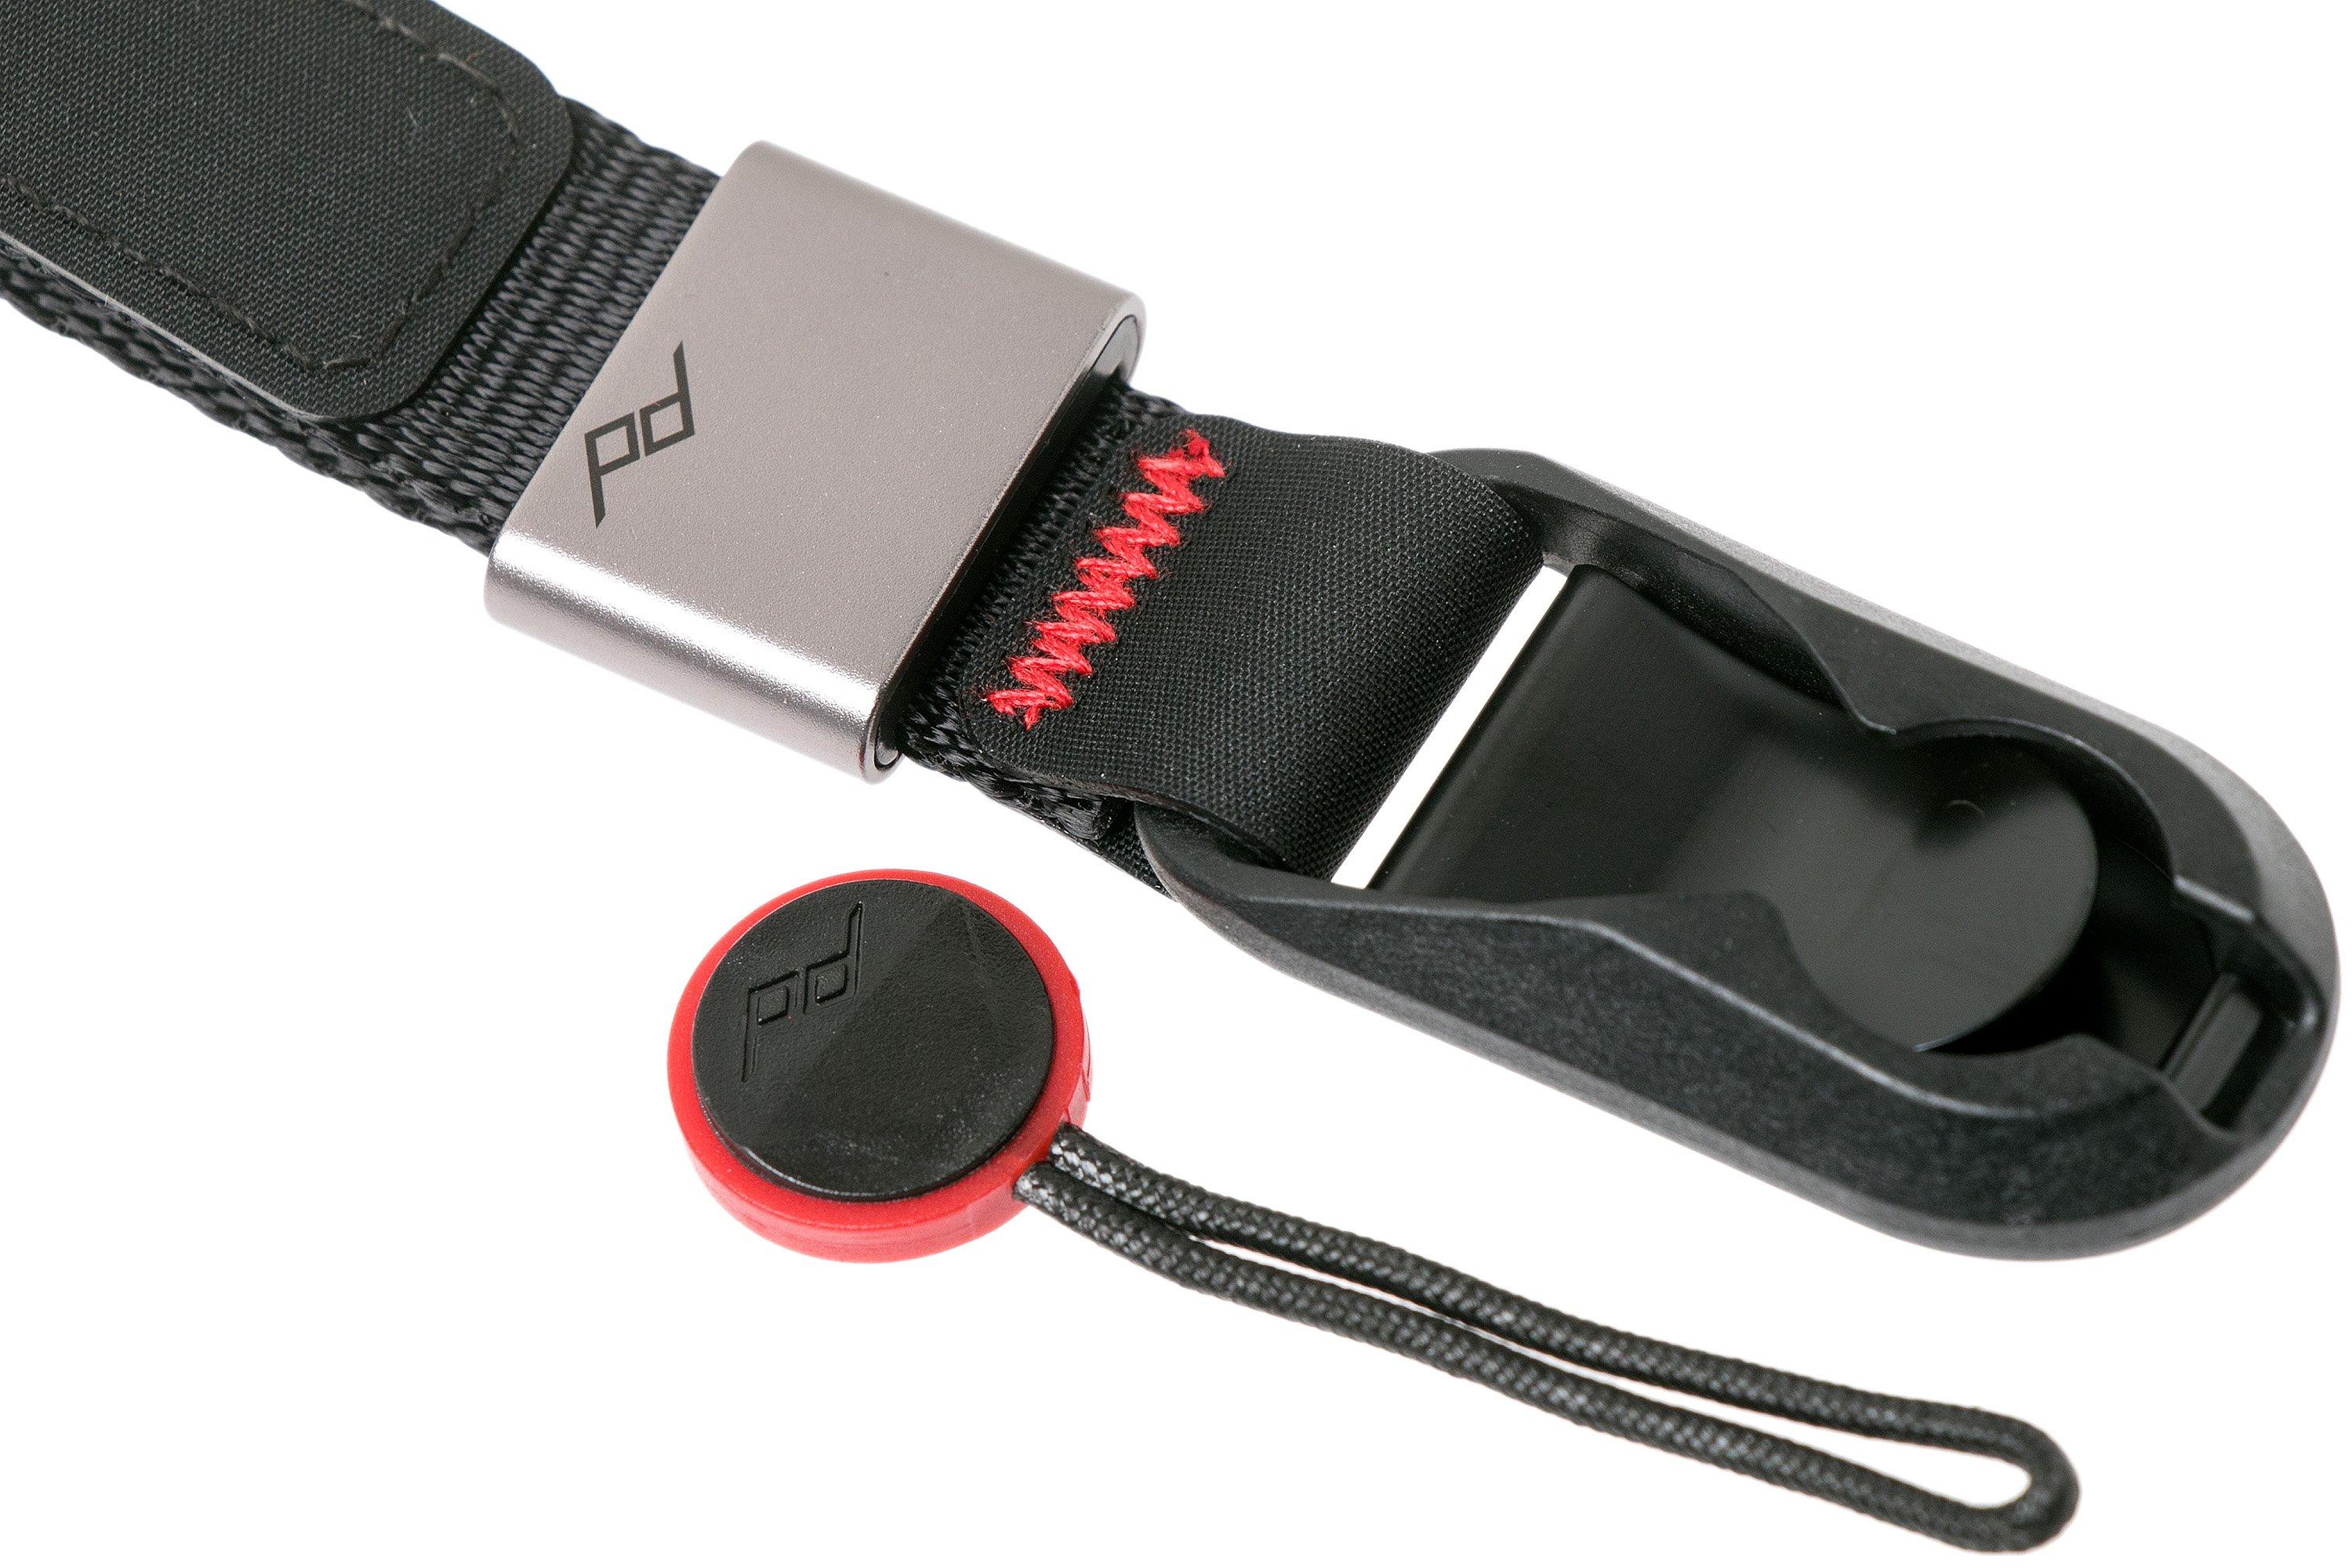 Peak Design Cuff wrist strap black, CF-BL-3  Advantageously shopping at